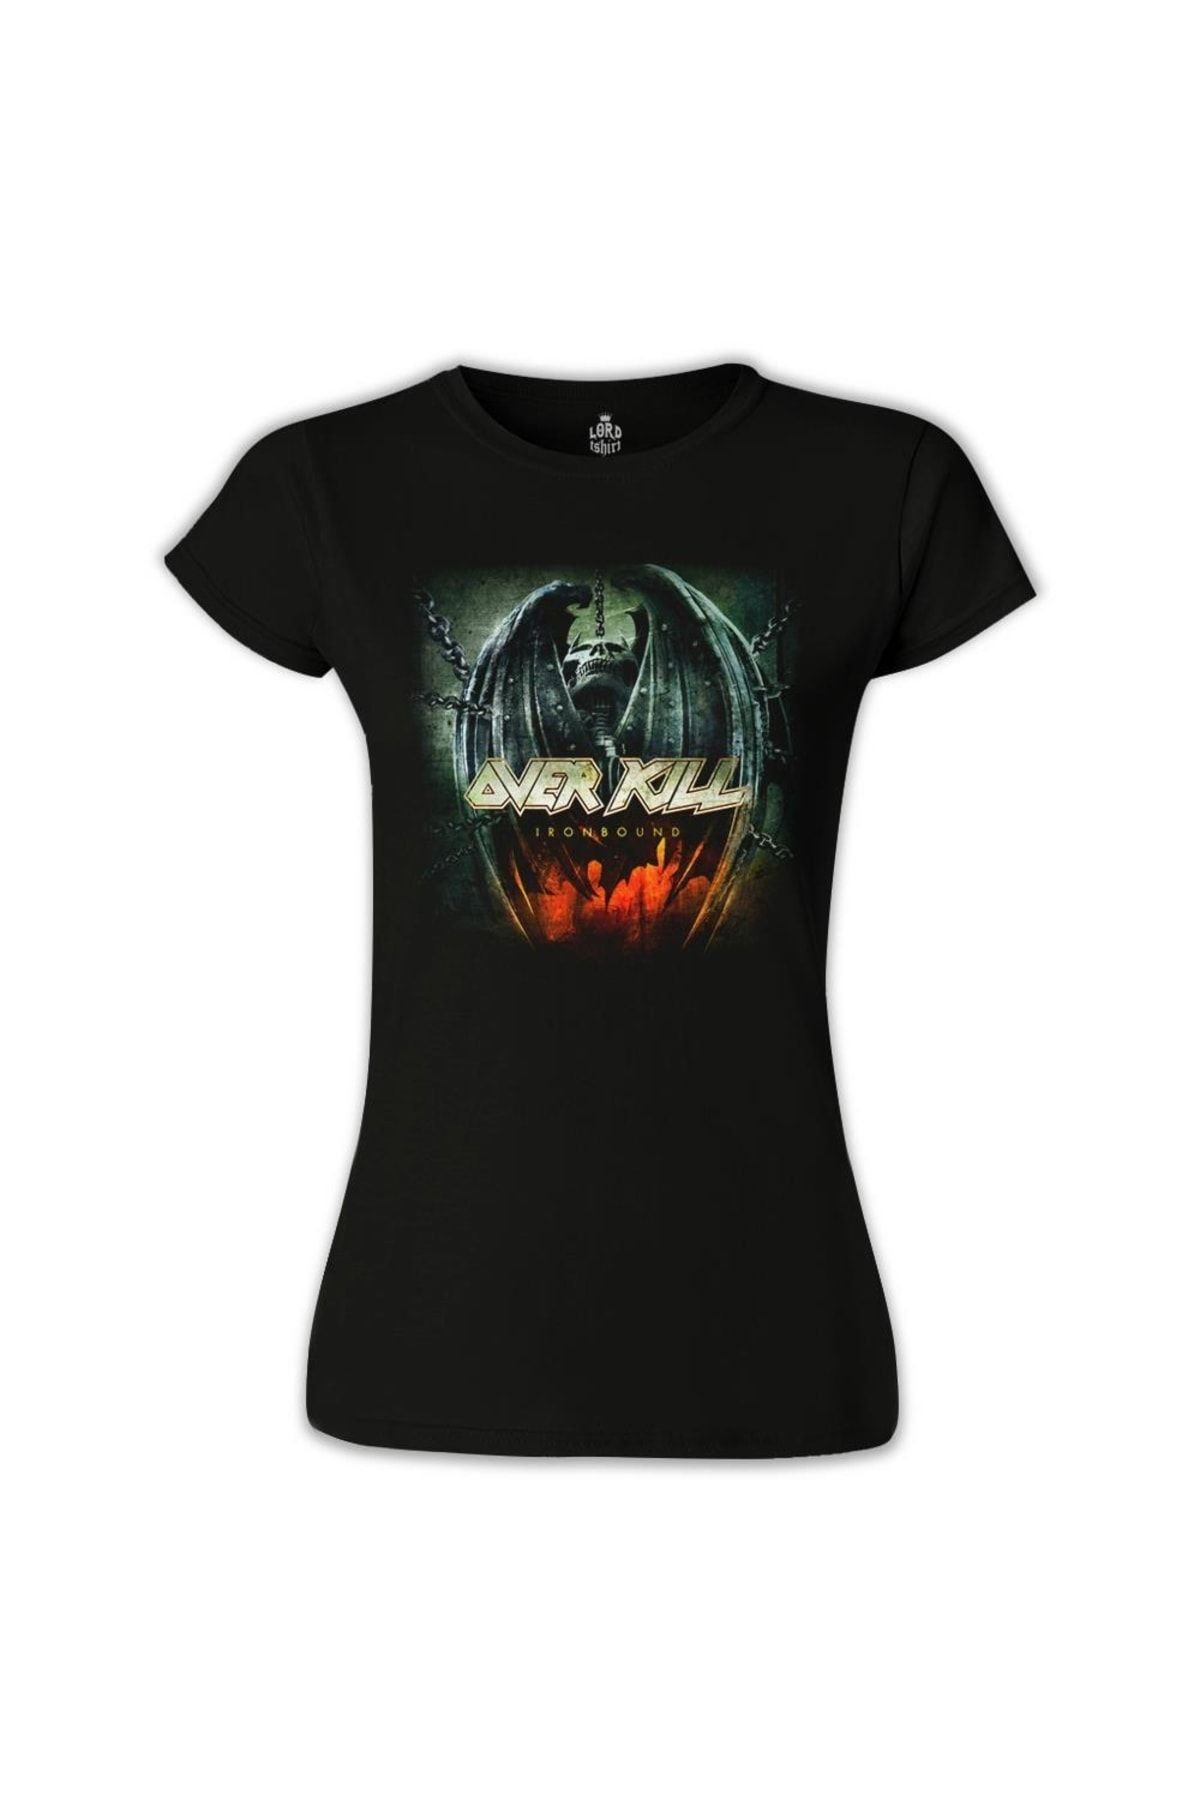 Lord T-Shirt Kadın Overkill  Iron Bound Siyah  Tshirt